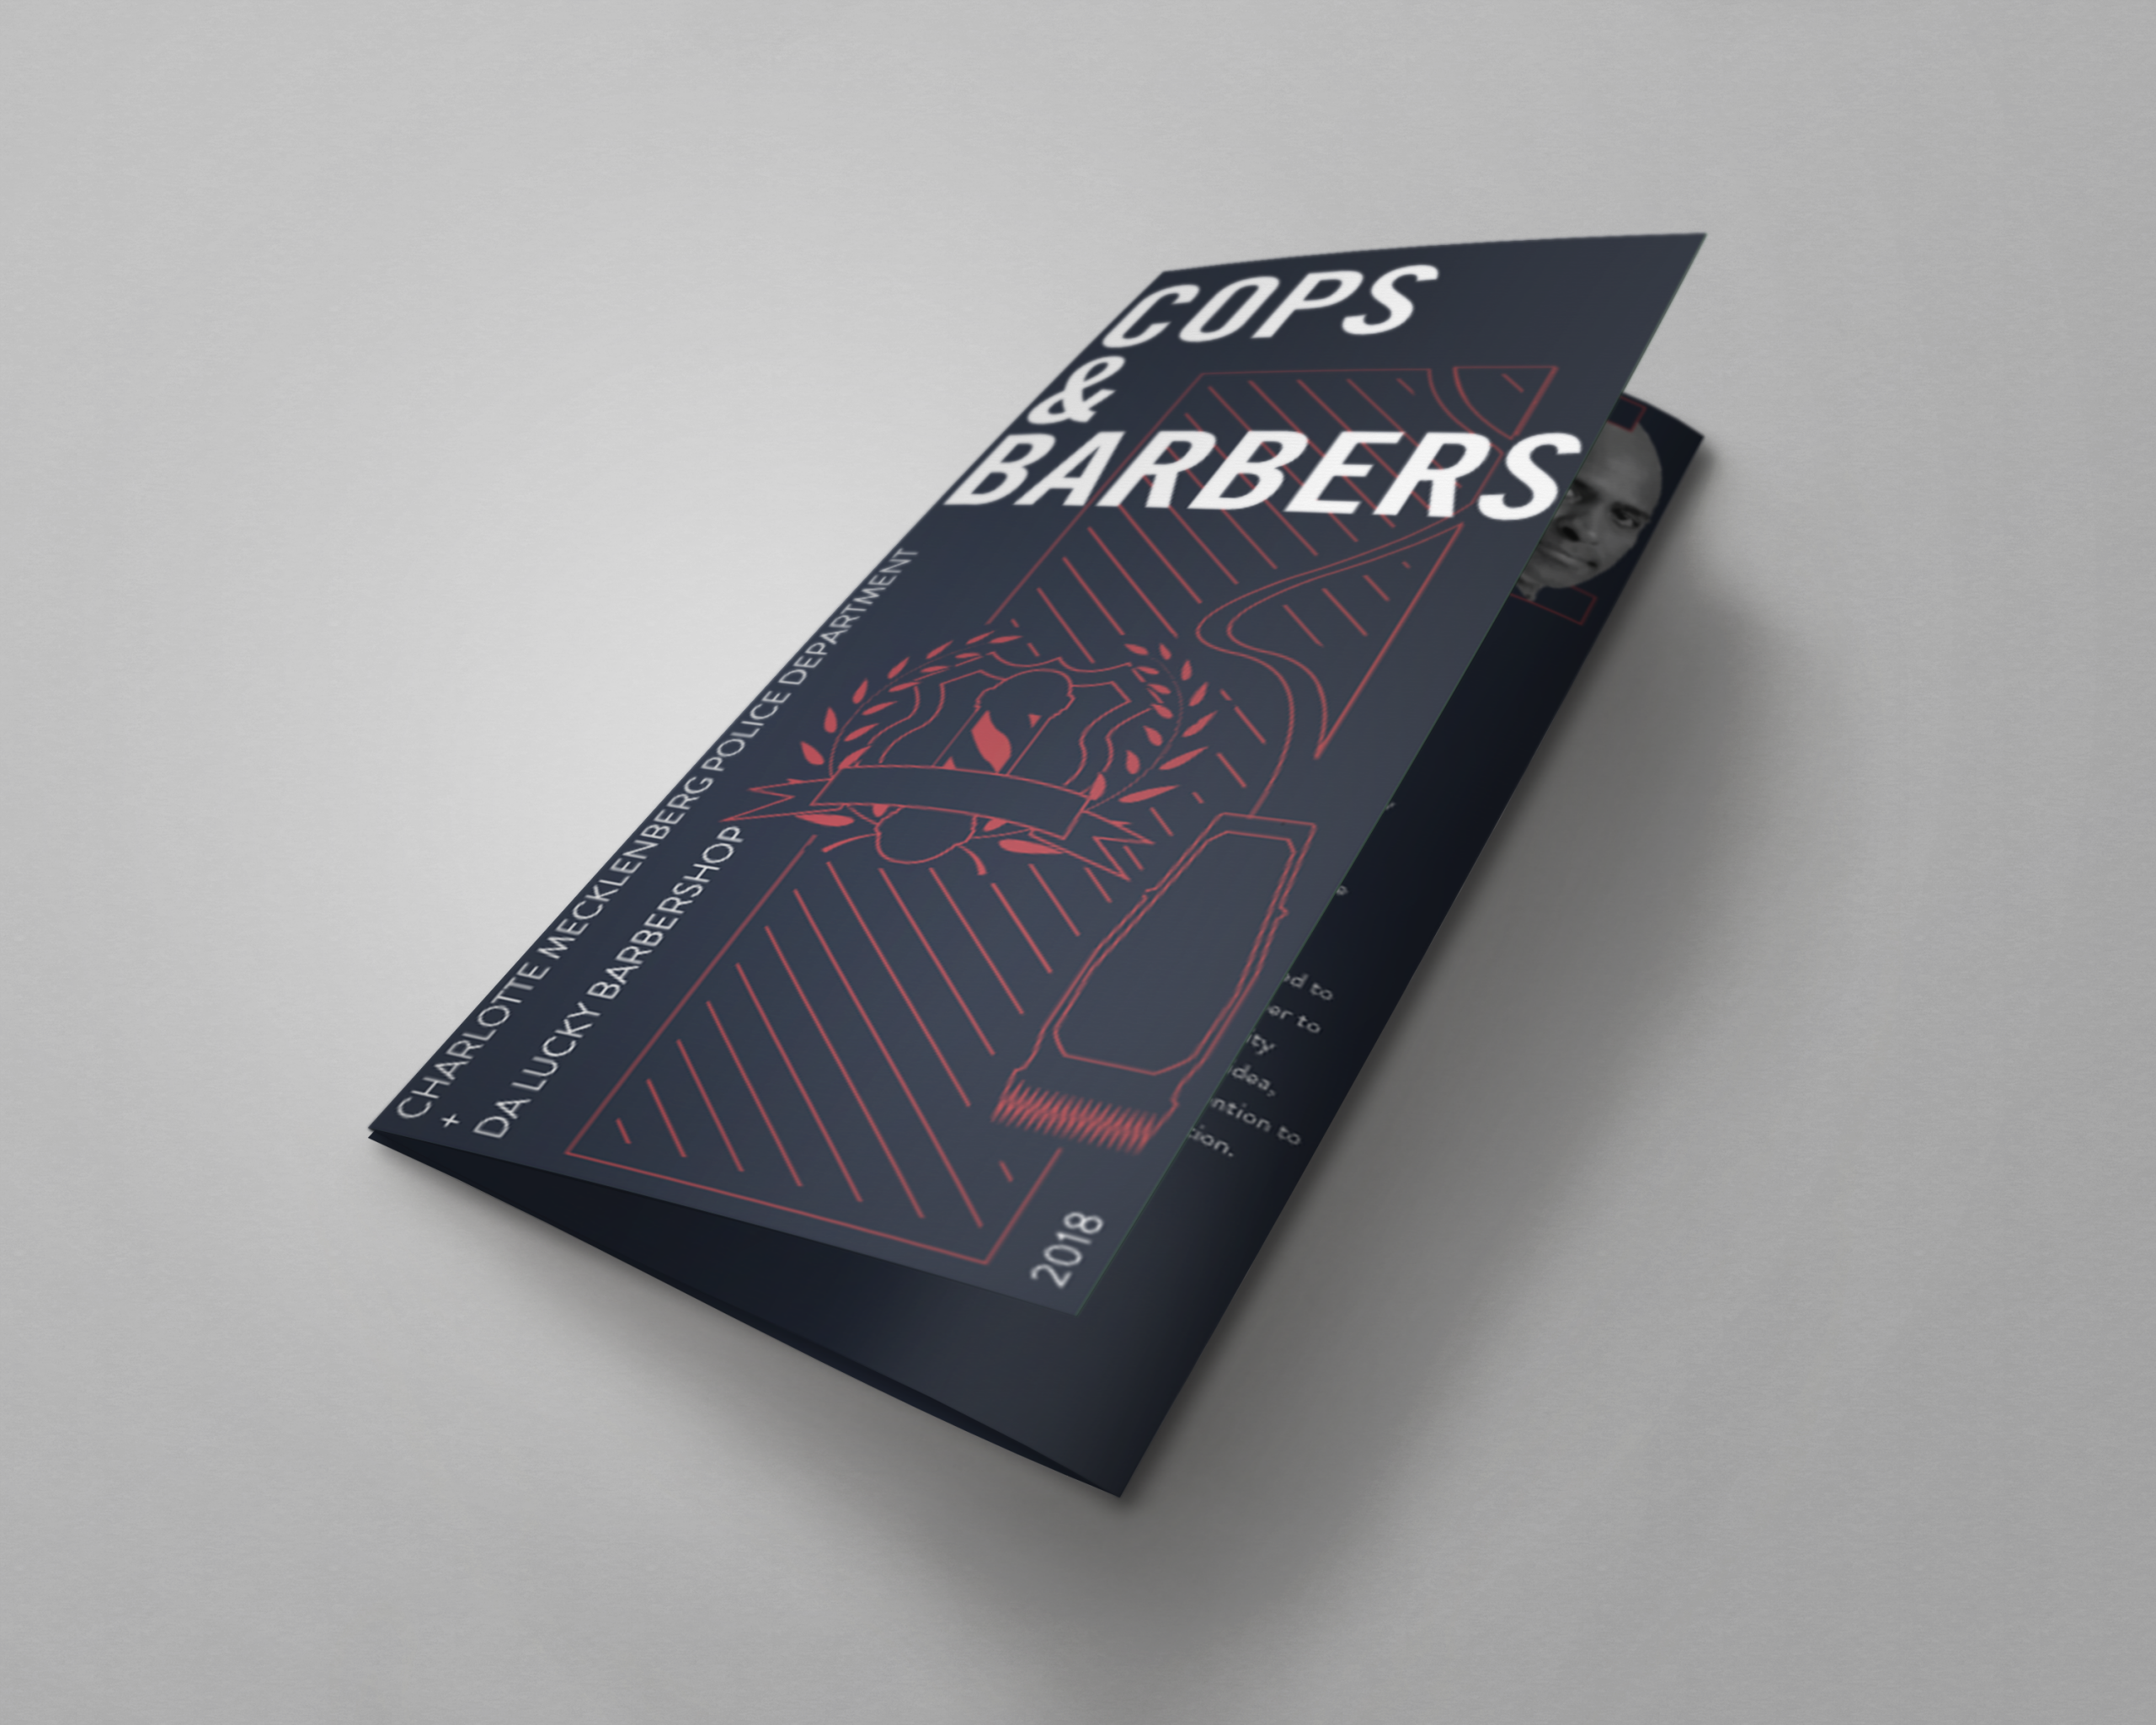 cops and barbers print brochure design